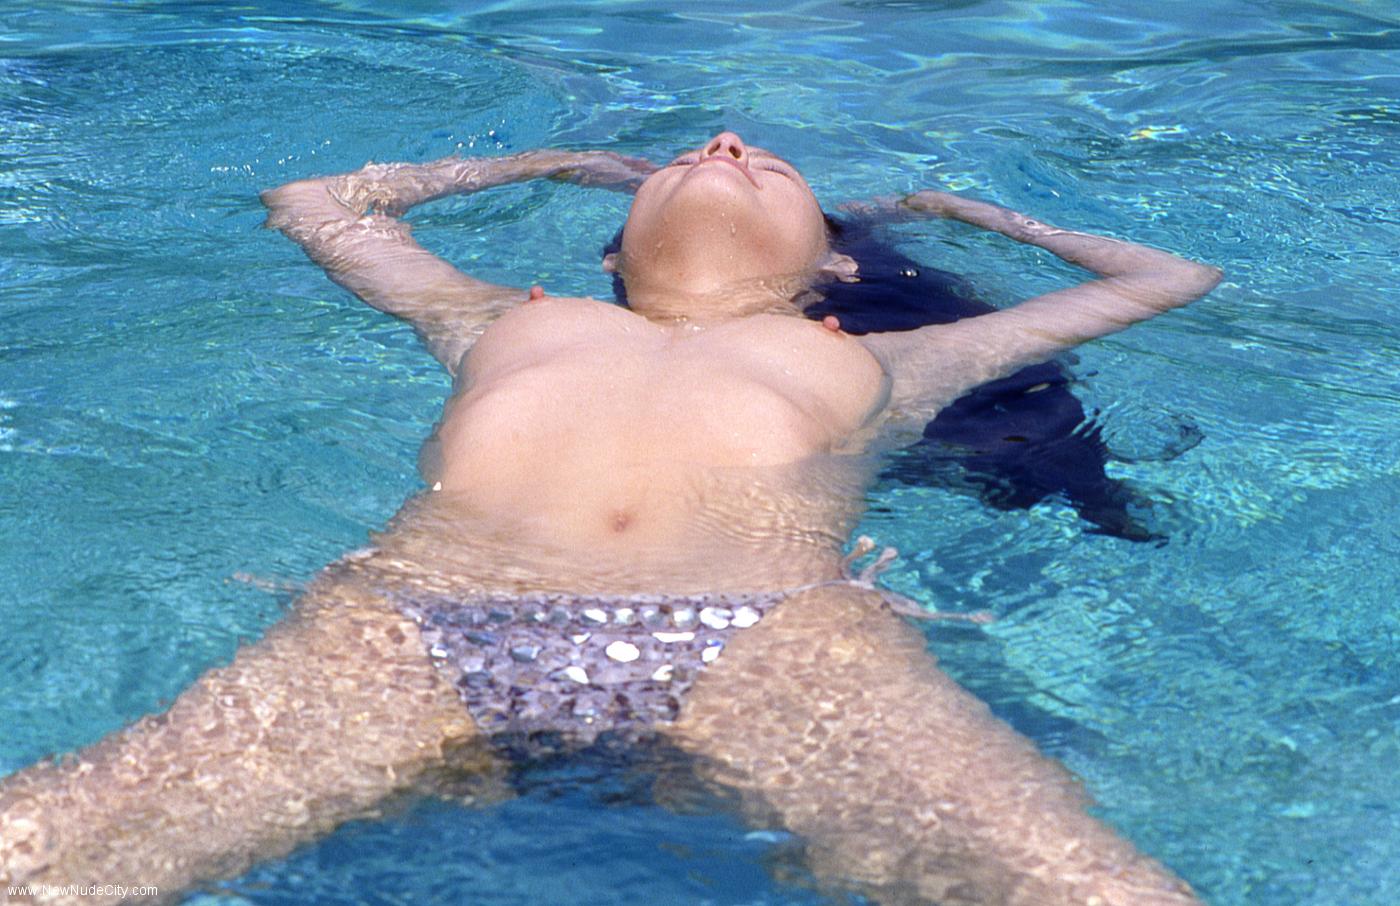 Join sweet teen Randi for a naked swim